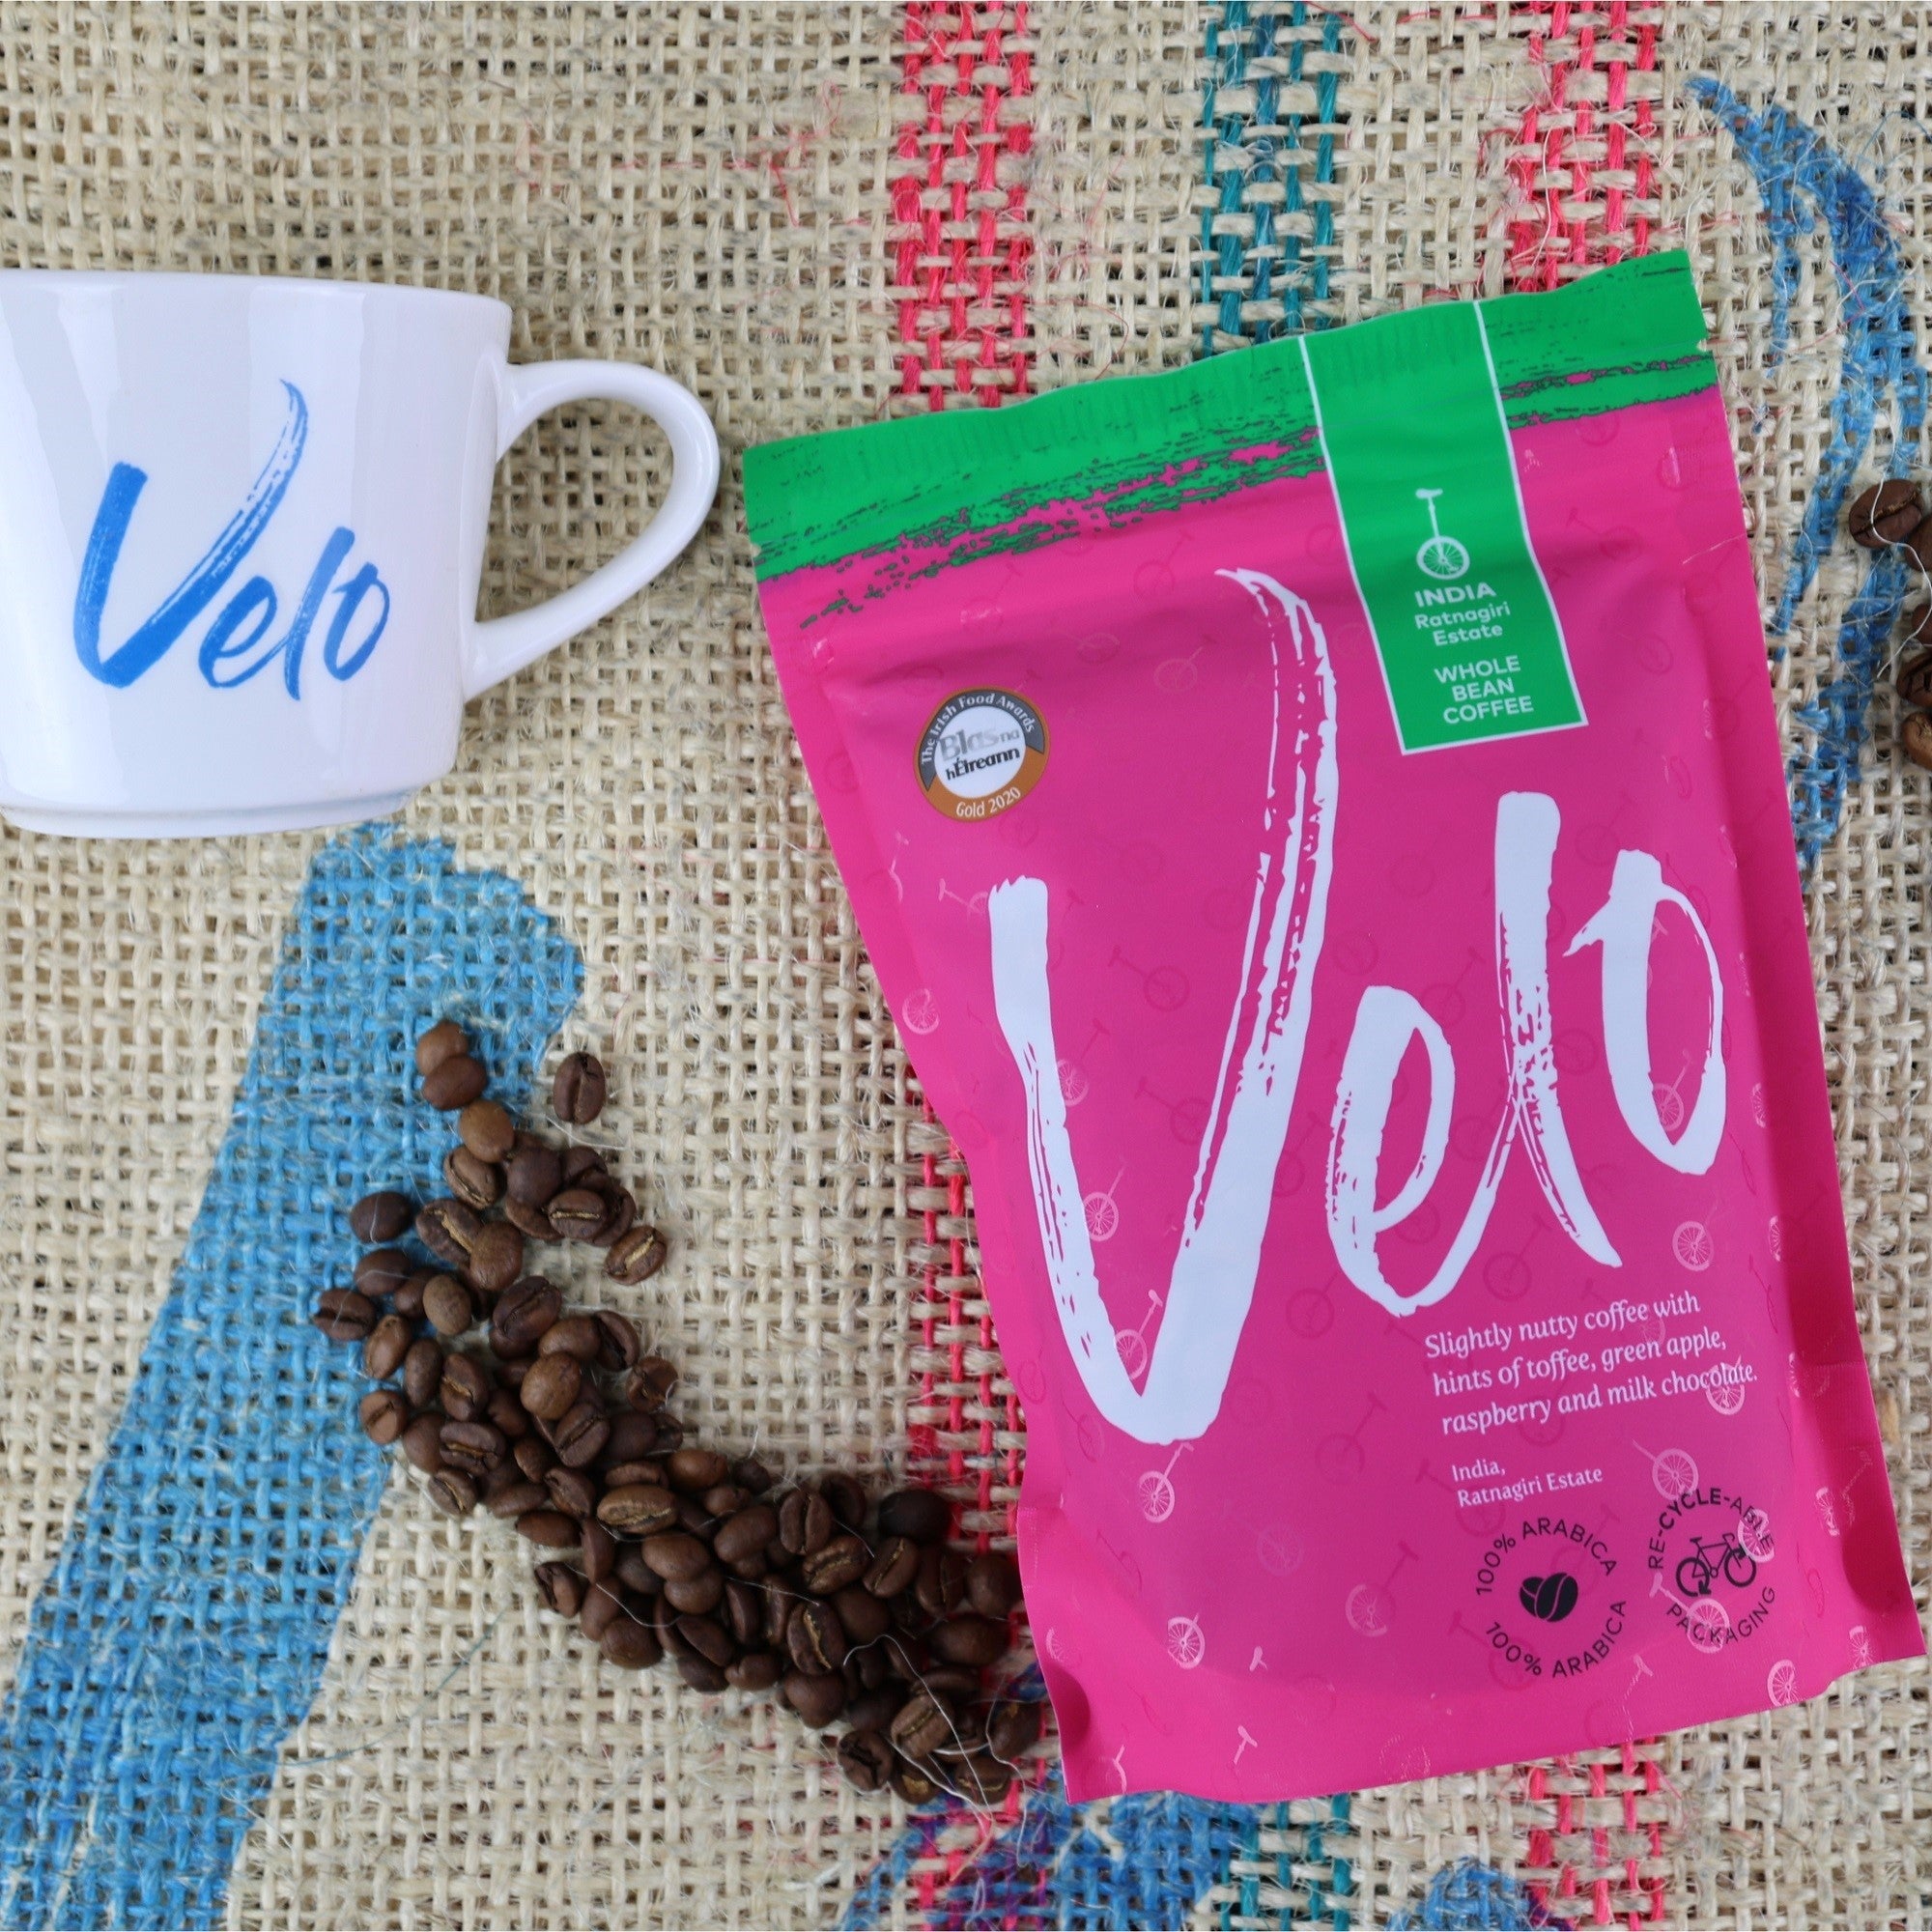 Ratnagiri Estate 200g Coffee Bag India - Velo Coffee Roasters